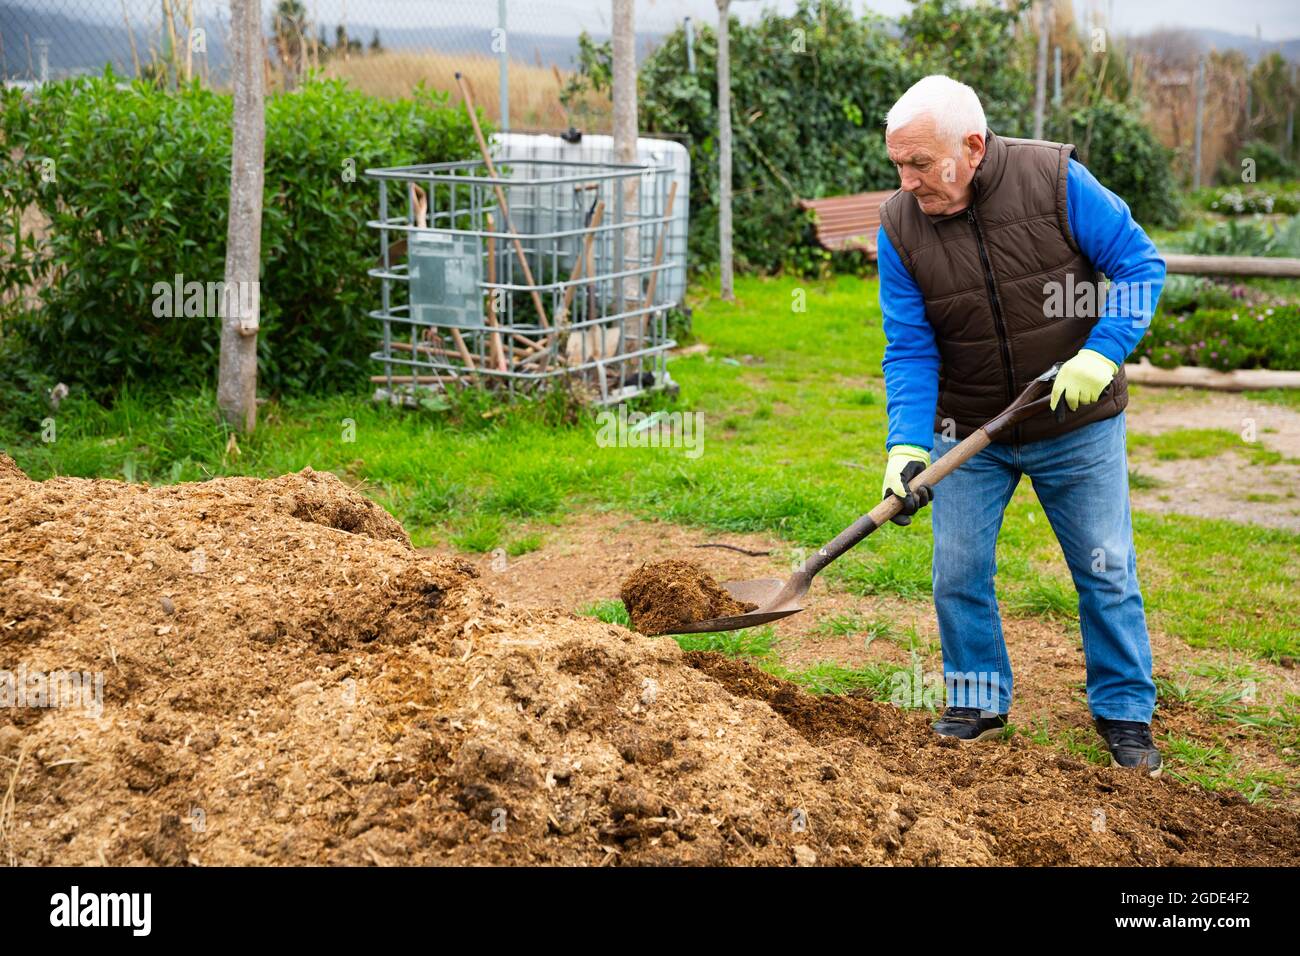 Mature man scattering peat shovel on garden beds Stock Photo - Alamy